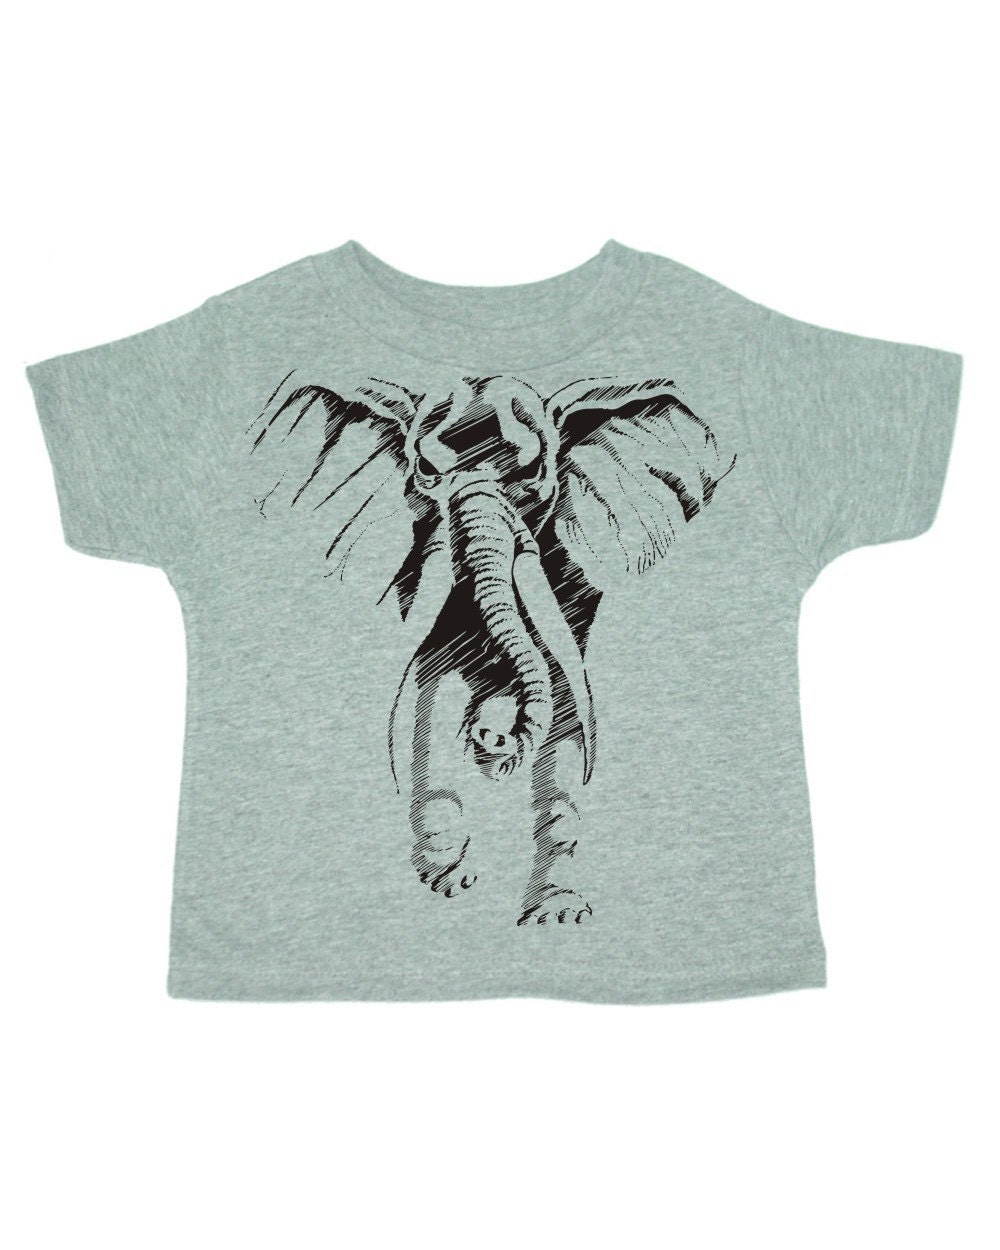 Ghost Elephant on Infants Rabbit Skins Short Sleeve tee